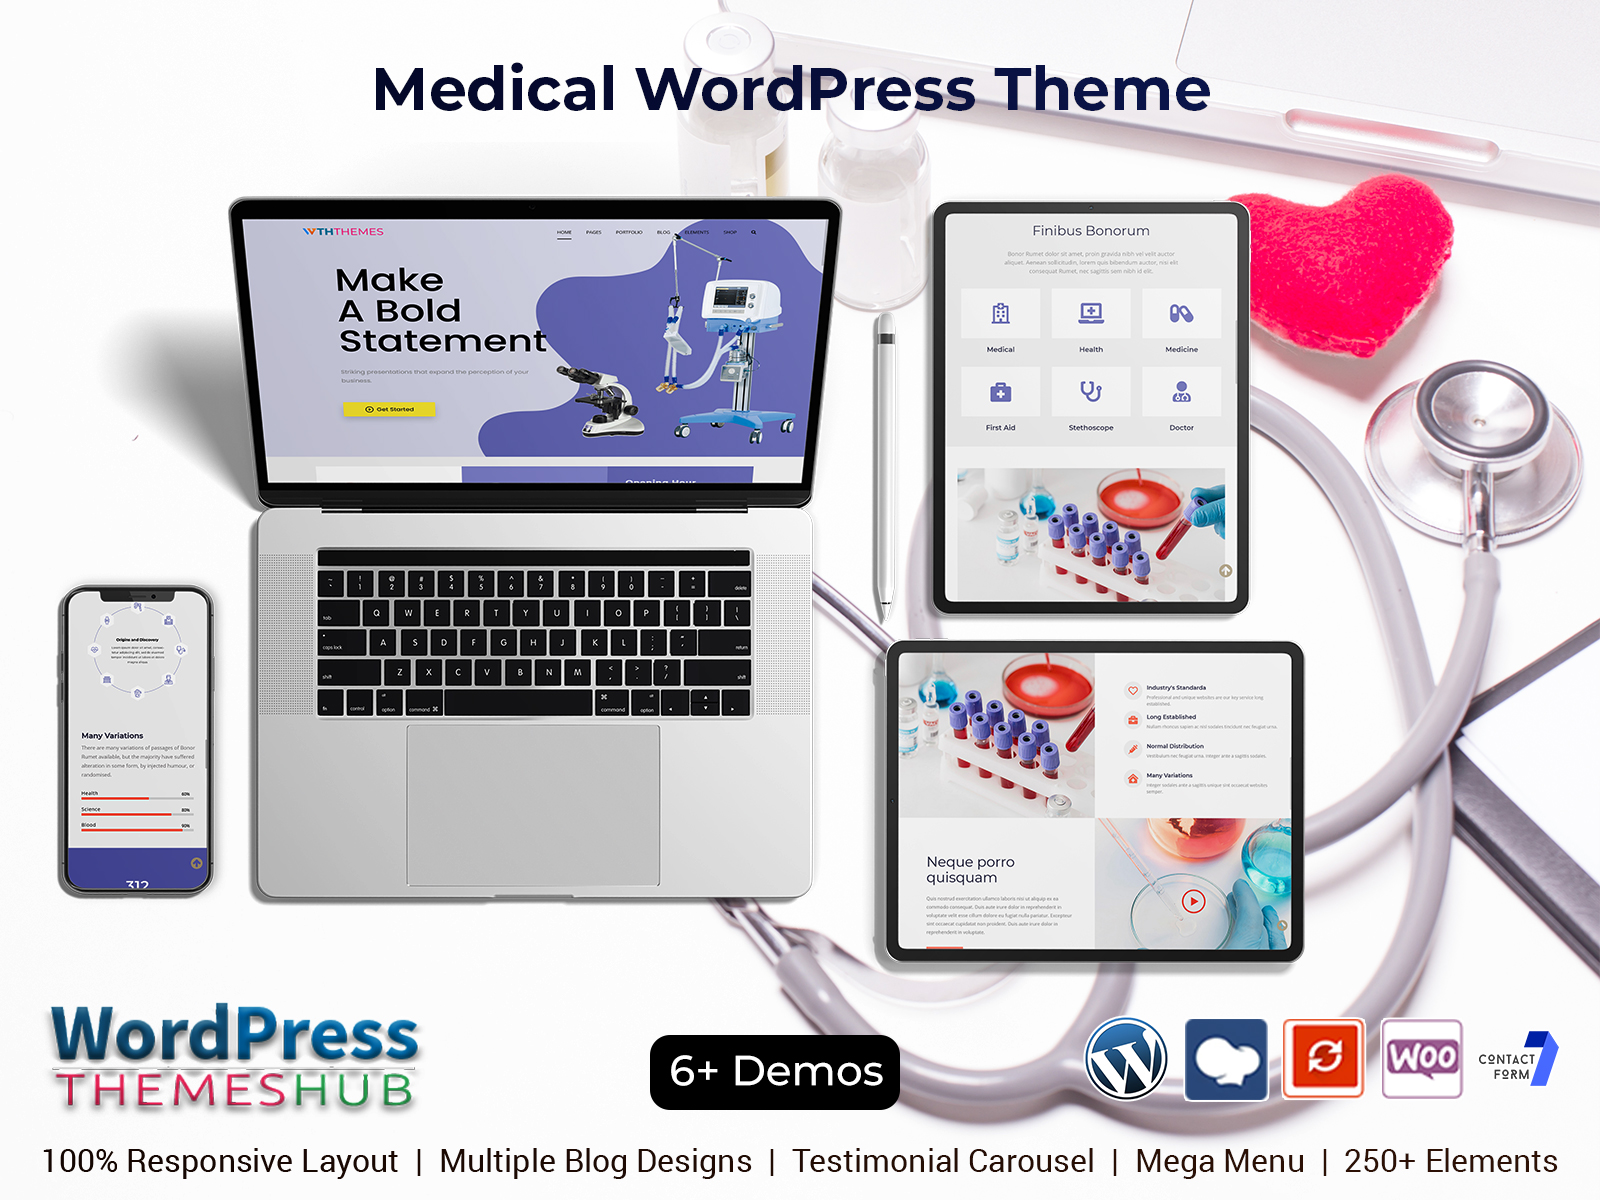 Medical WordPress Theme To Make Medical Website